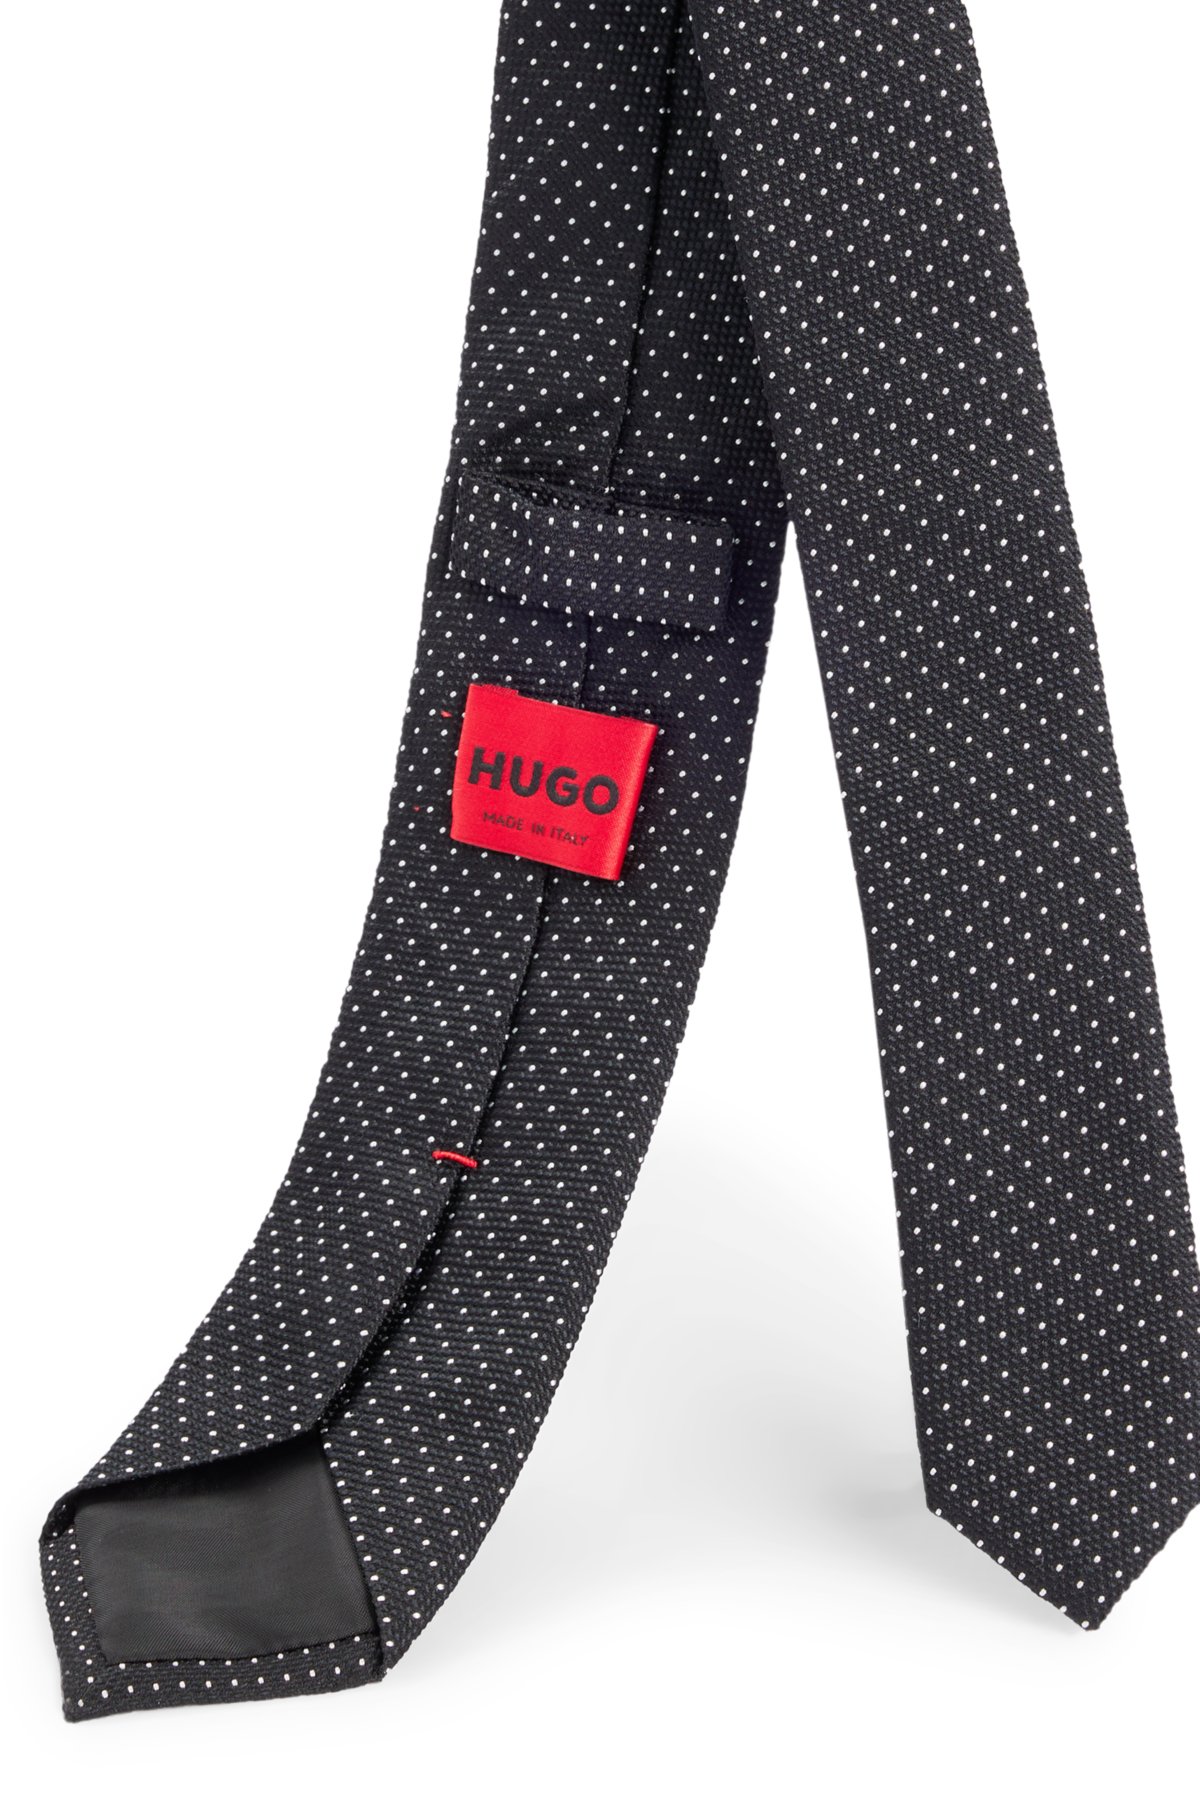 HUGO - Krawatte aus reiner mit Jacquard-Muster Seide